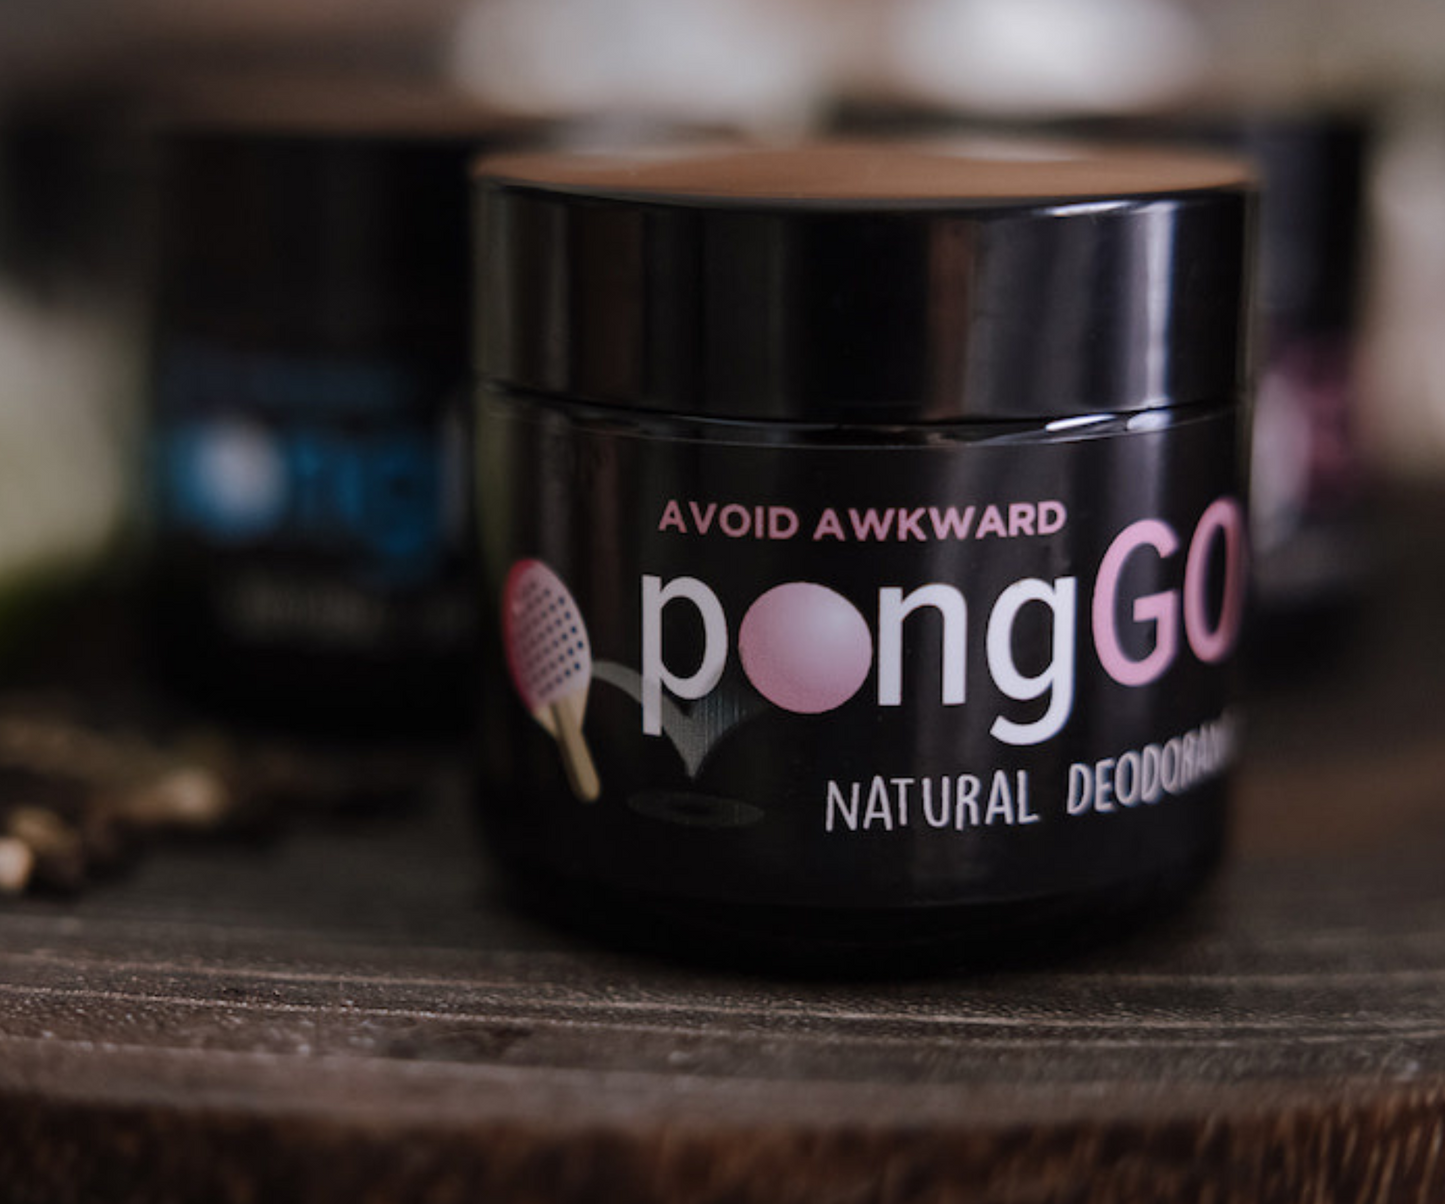 PongGo Natural Deodorant